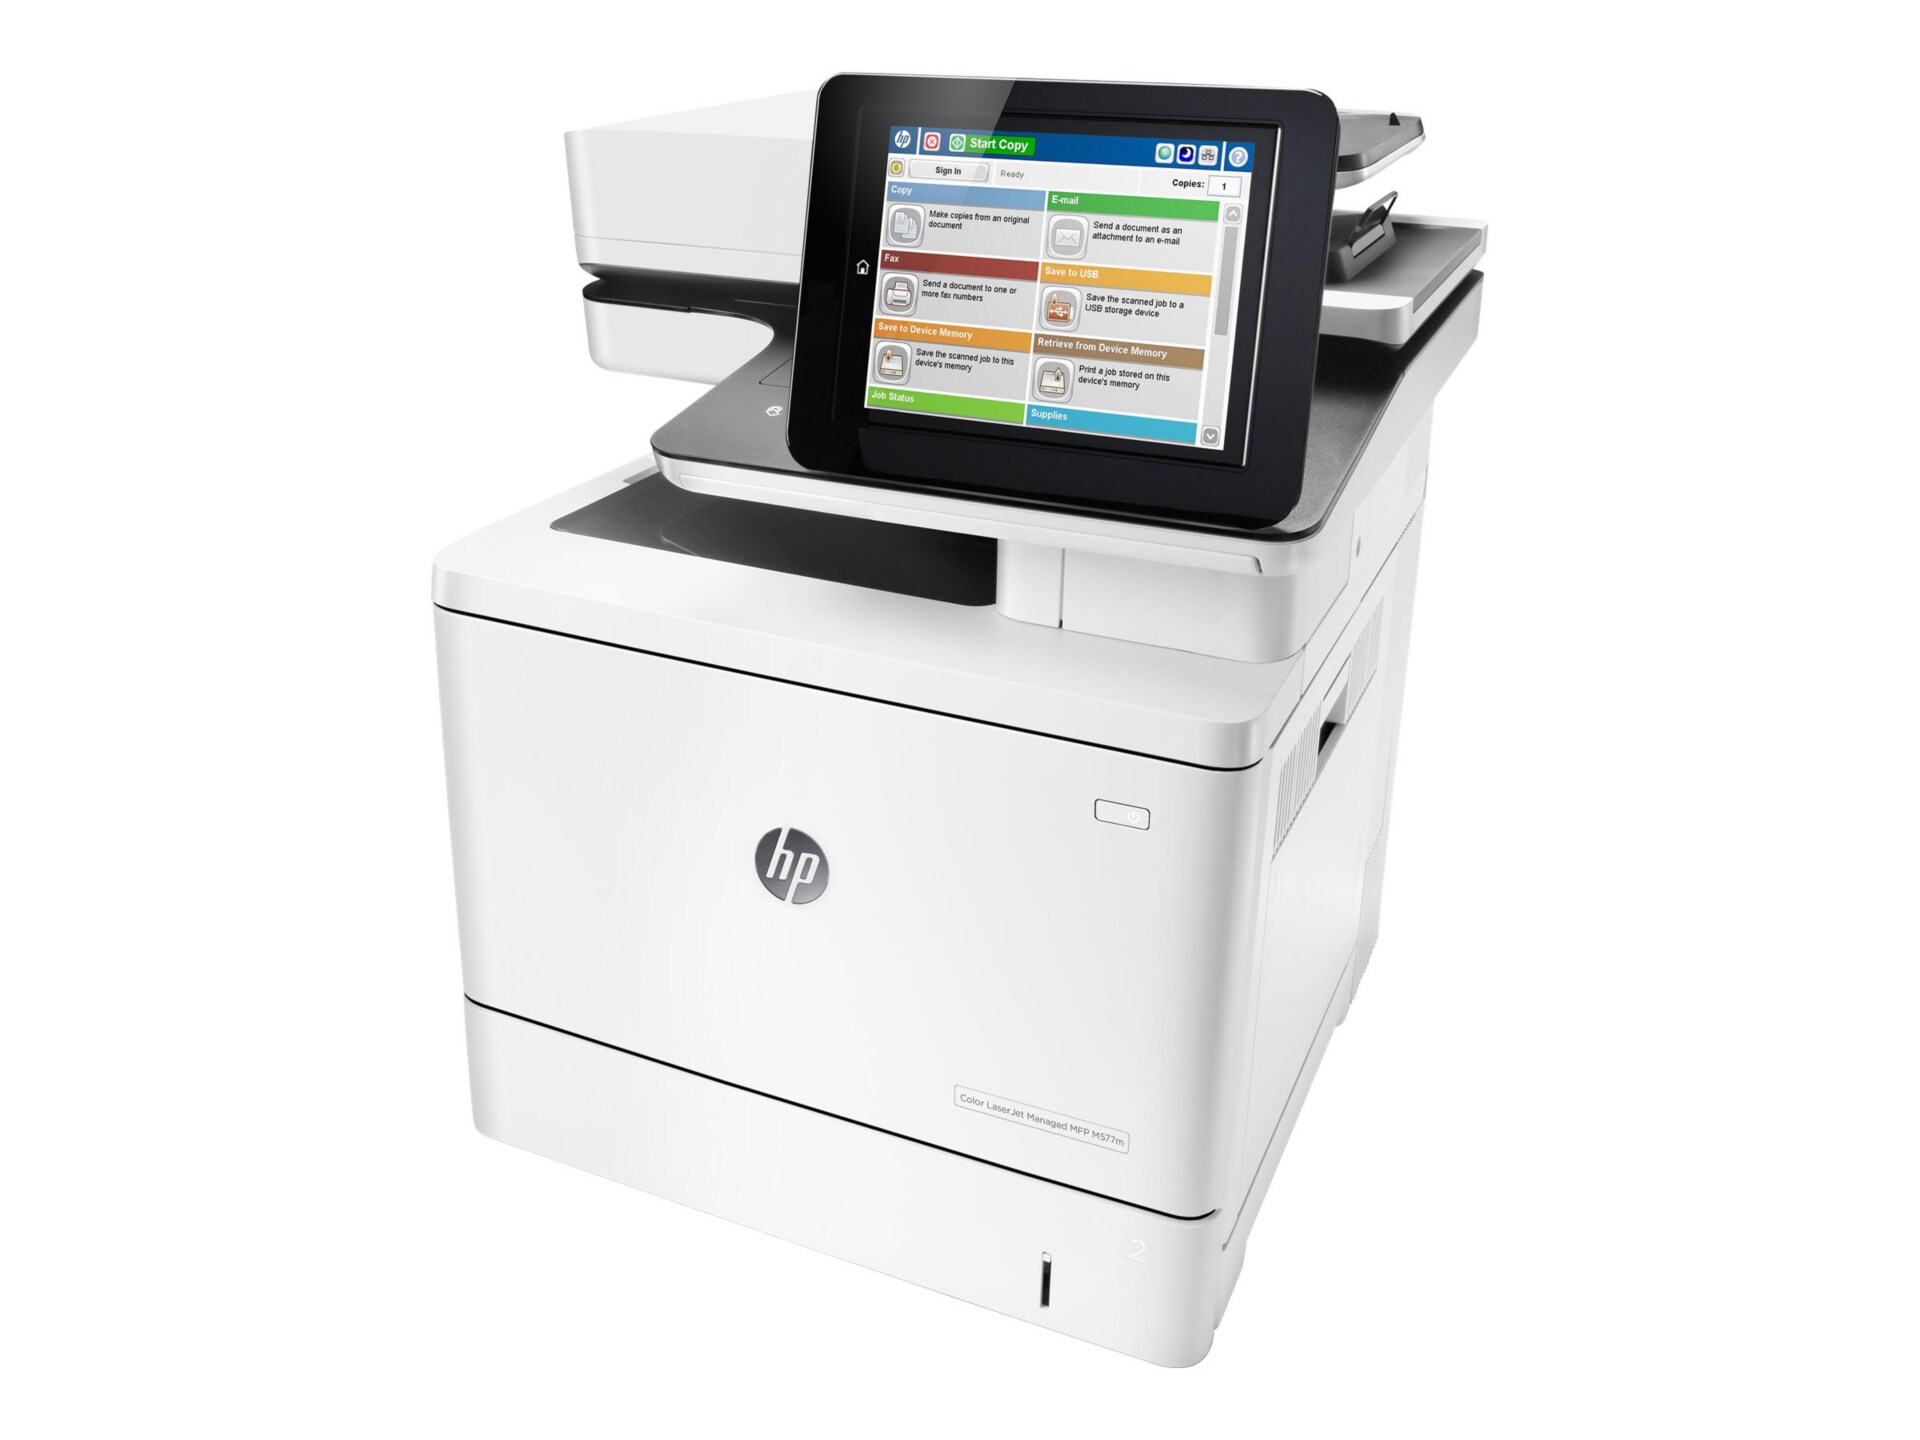 HP LaserJet Managed MFP M577dnm - multifunction printer (color)